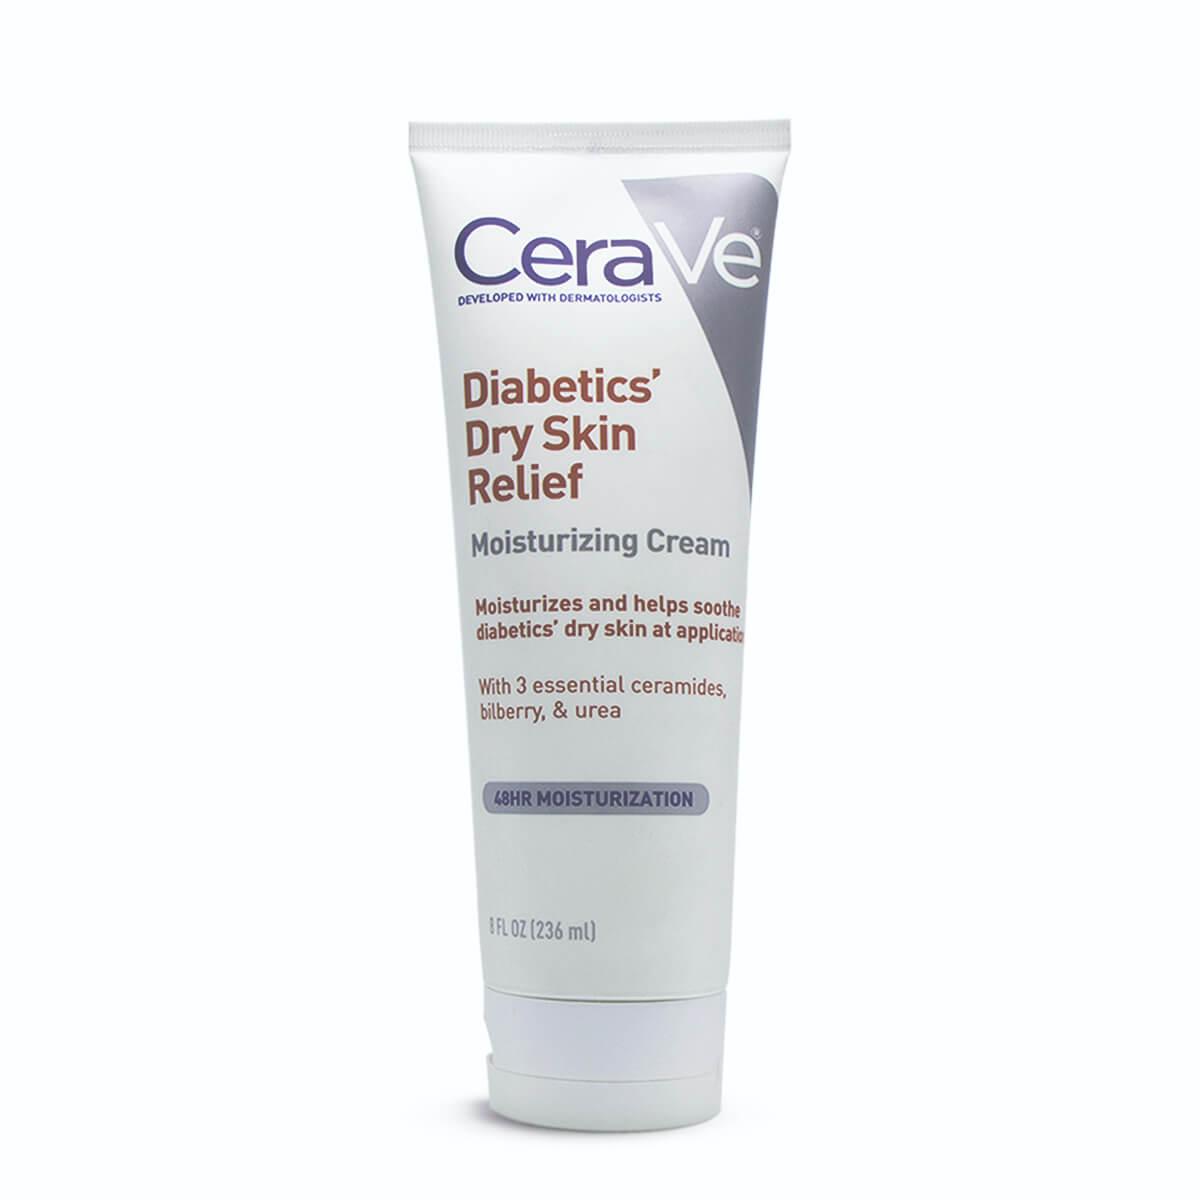 Cerave Diabetics' Dry Skin Relief Moisturizing Cream